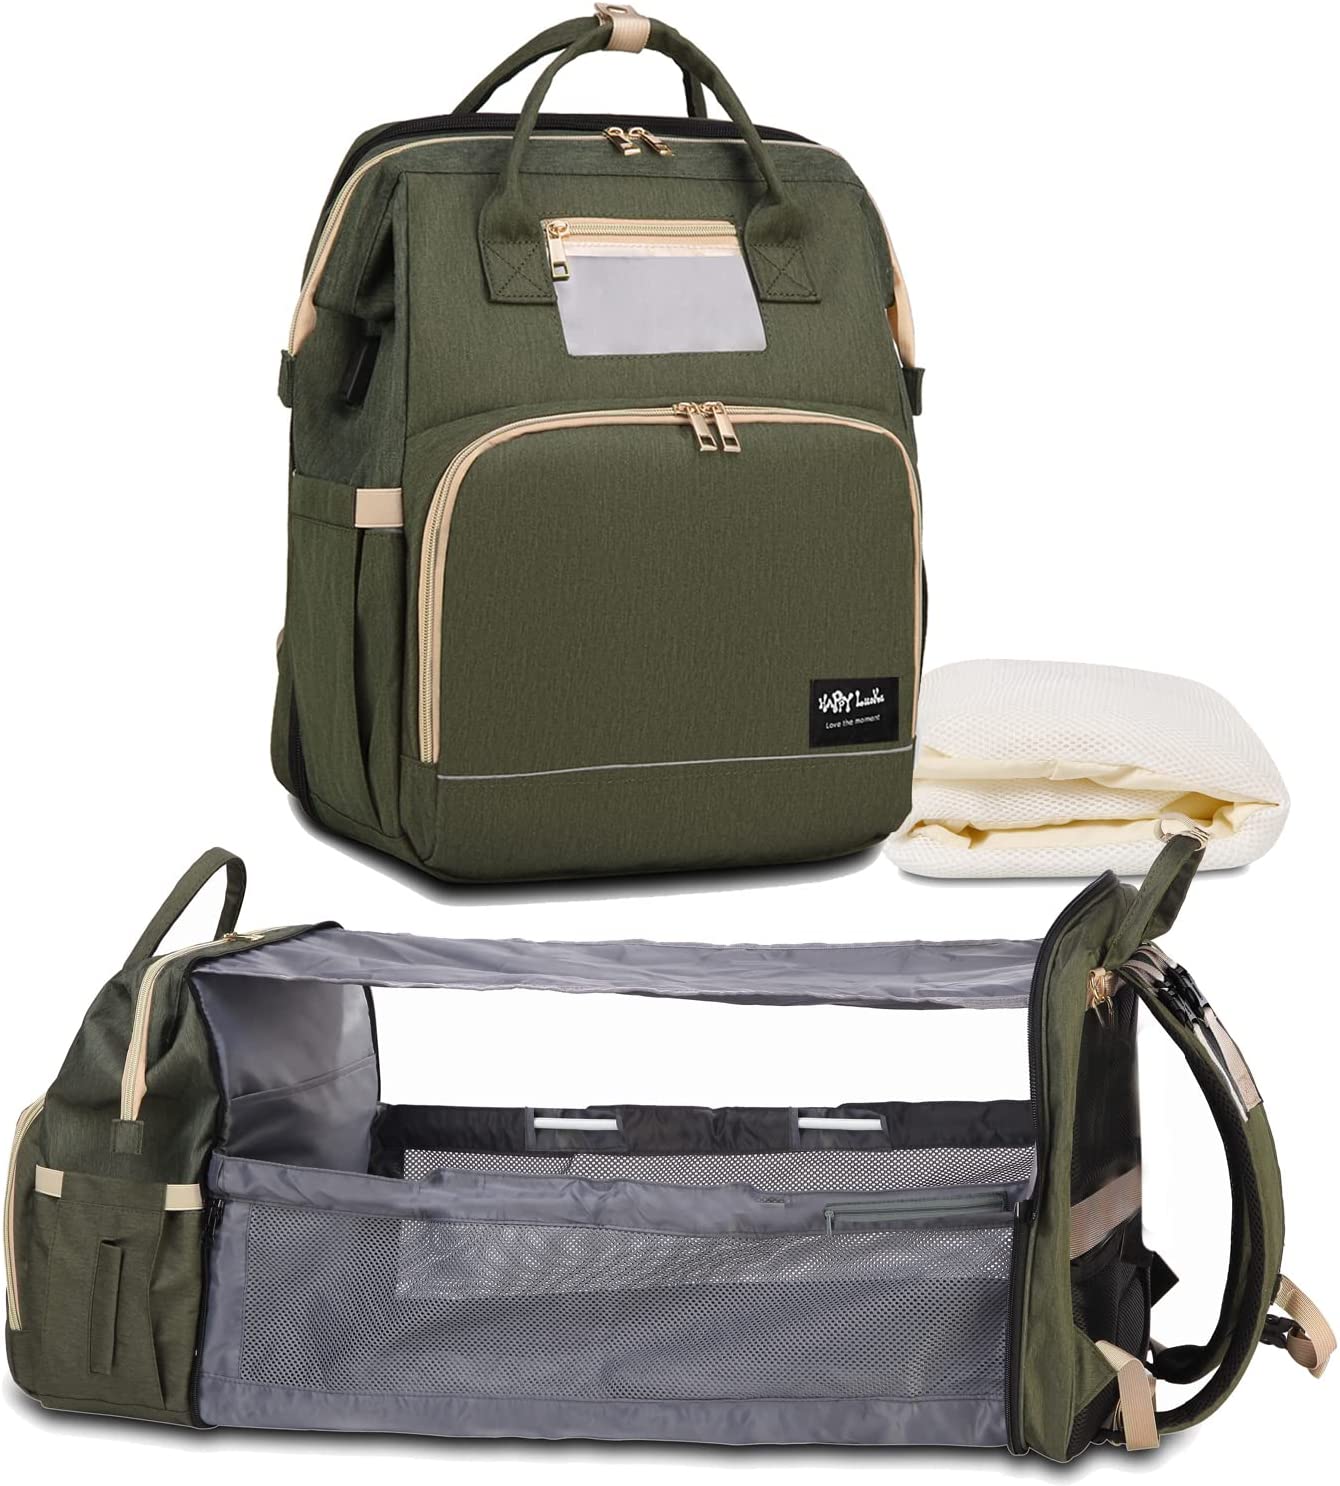 Happy Luoka Waterproof Backpack Portable Changing Station